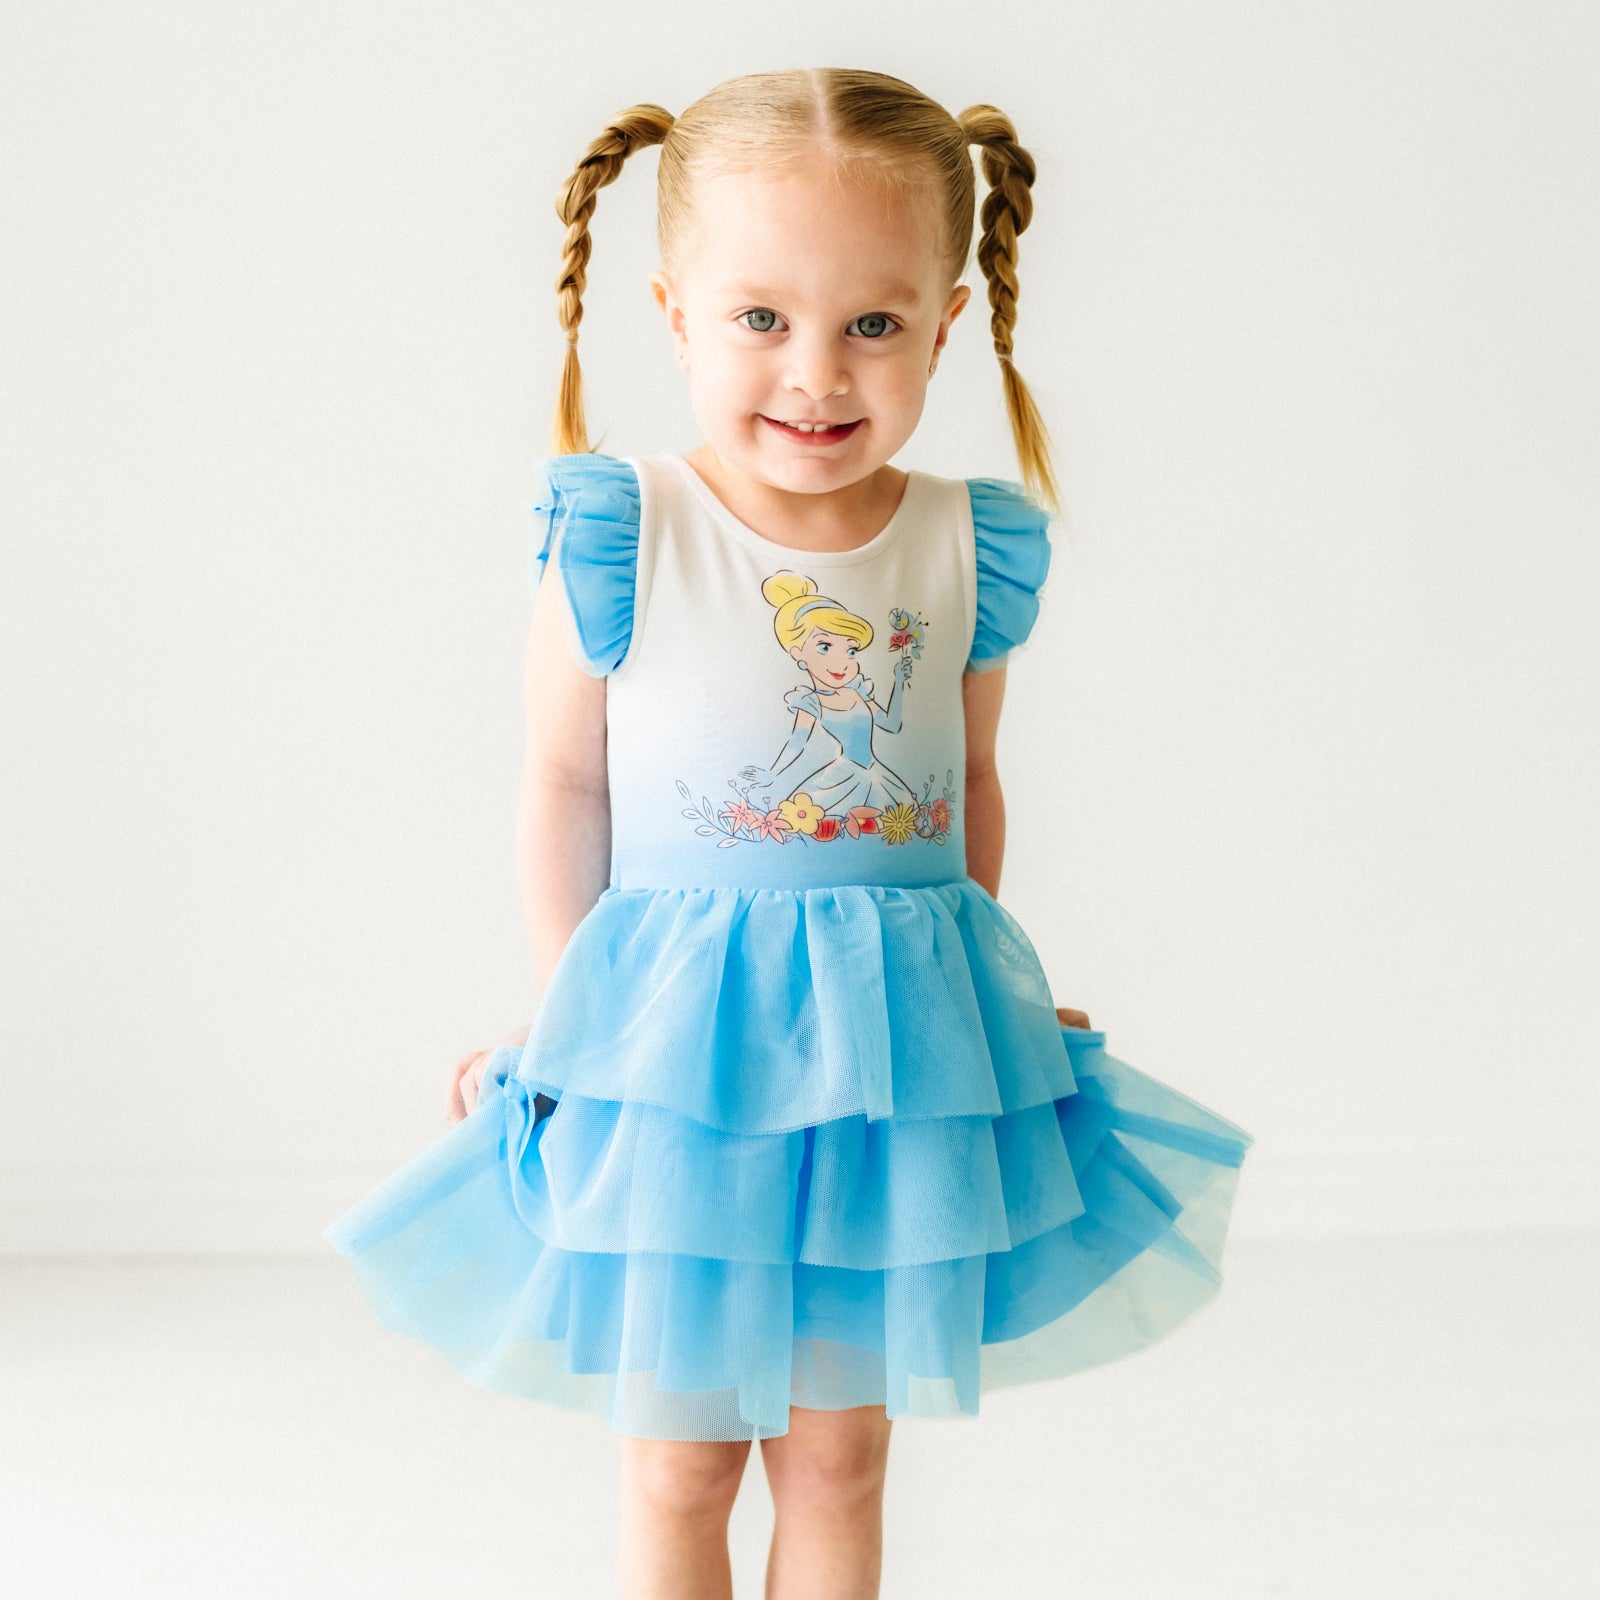 Child wearing a Cinderella flutter tiered tutu dress with bloomer